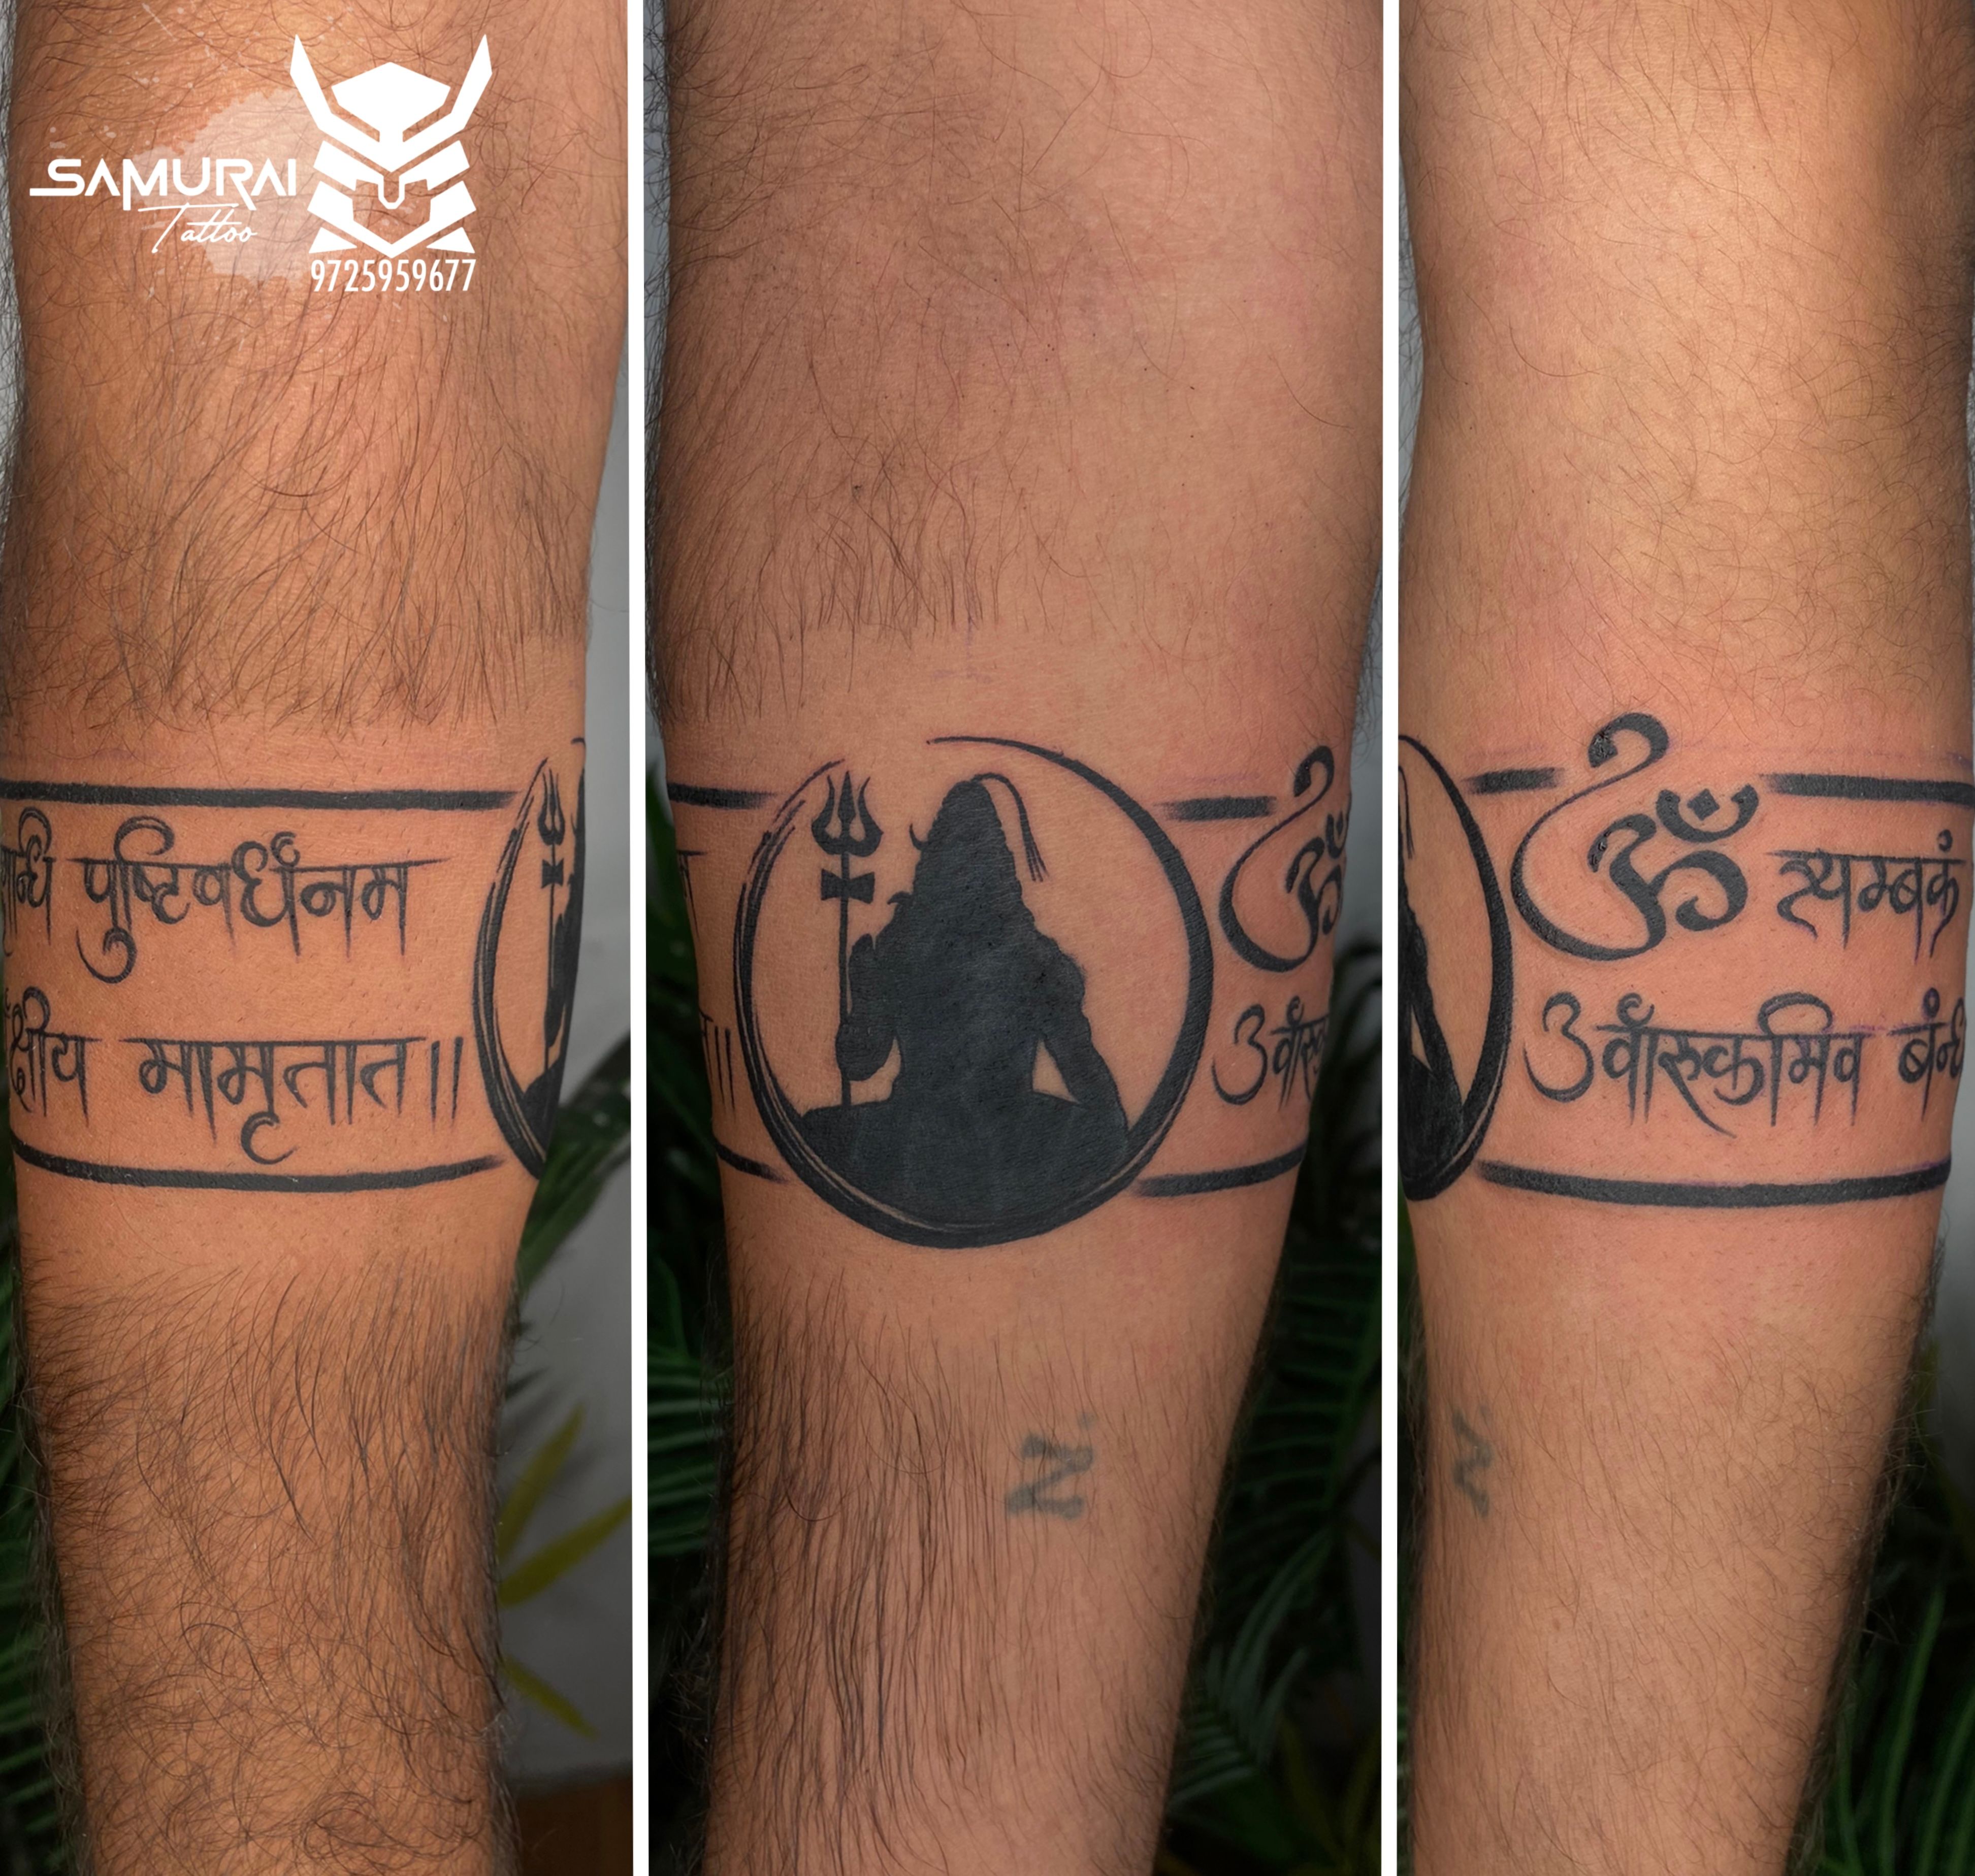 Mahadev tattoo design Images  ᵐˢνиɪ ishavni on ShareChat